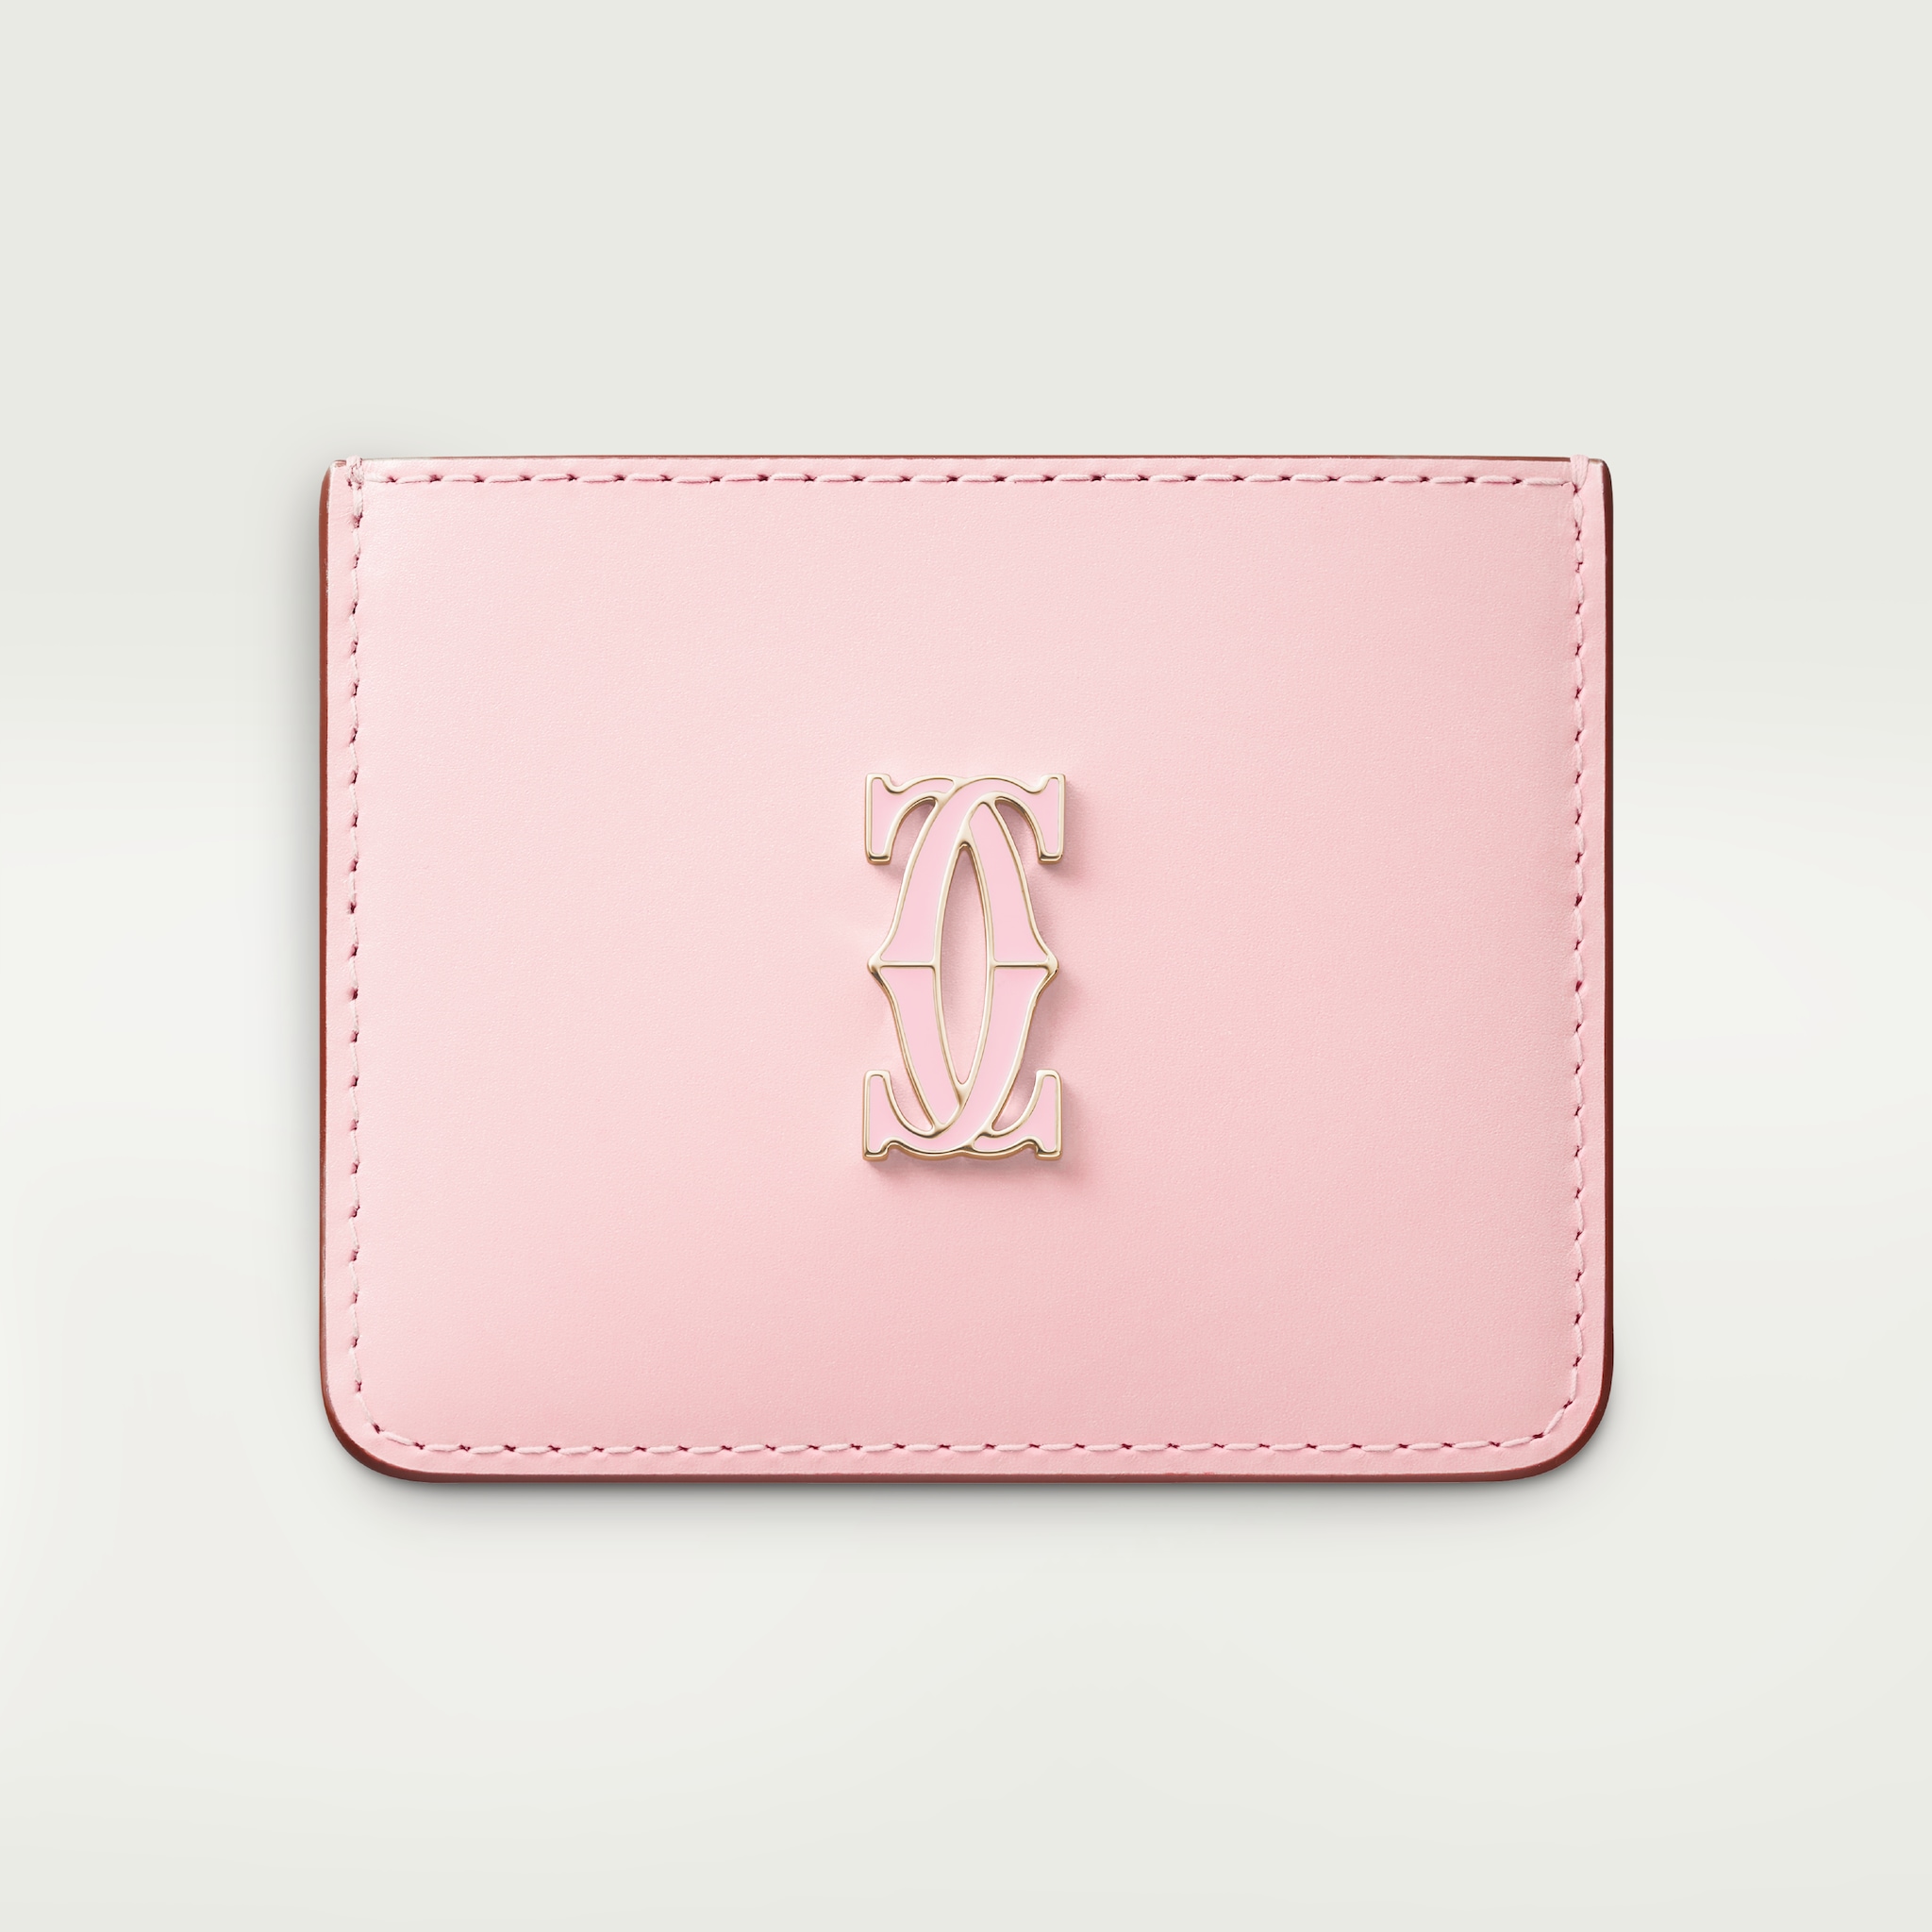 Simple Card Holder, C de CartierPale pink calfskin, golden and pale pink enamel finish